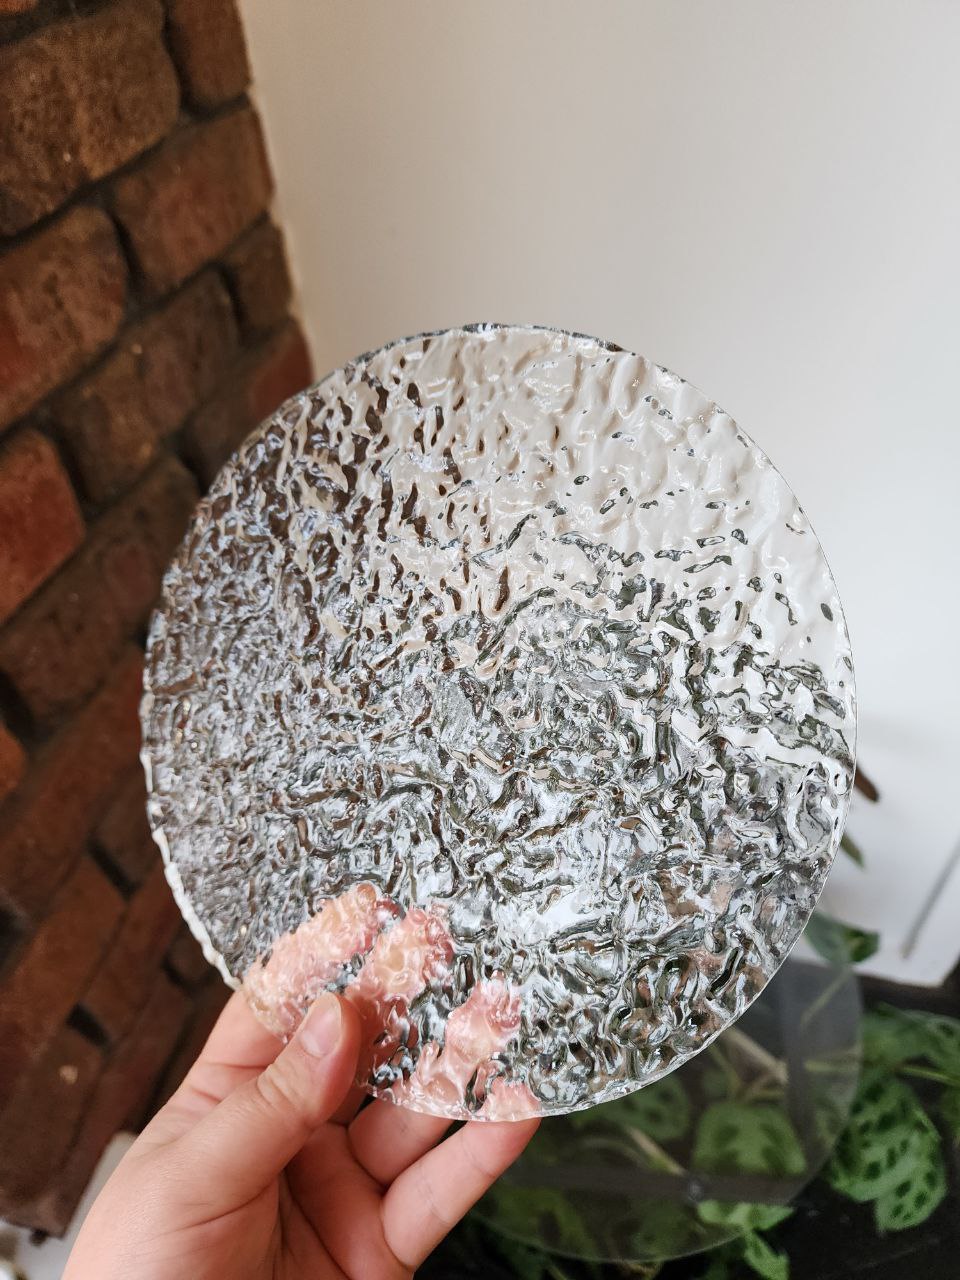 Foil-Printed Moon Craft 